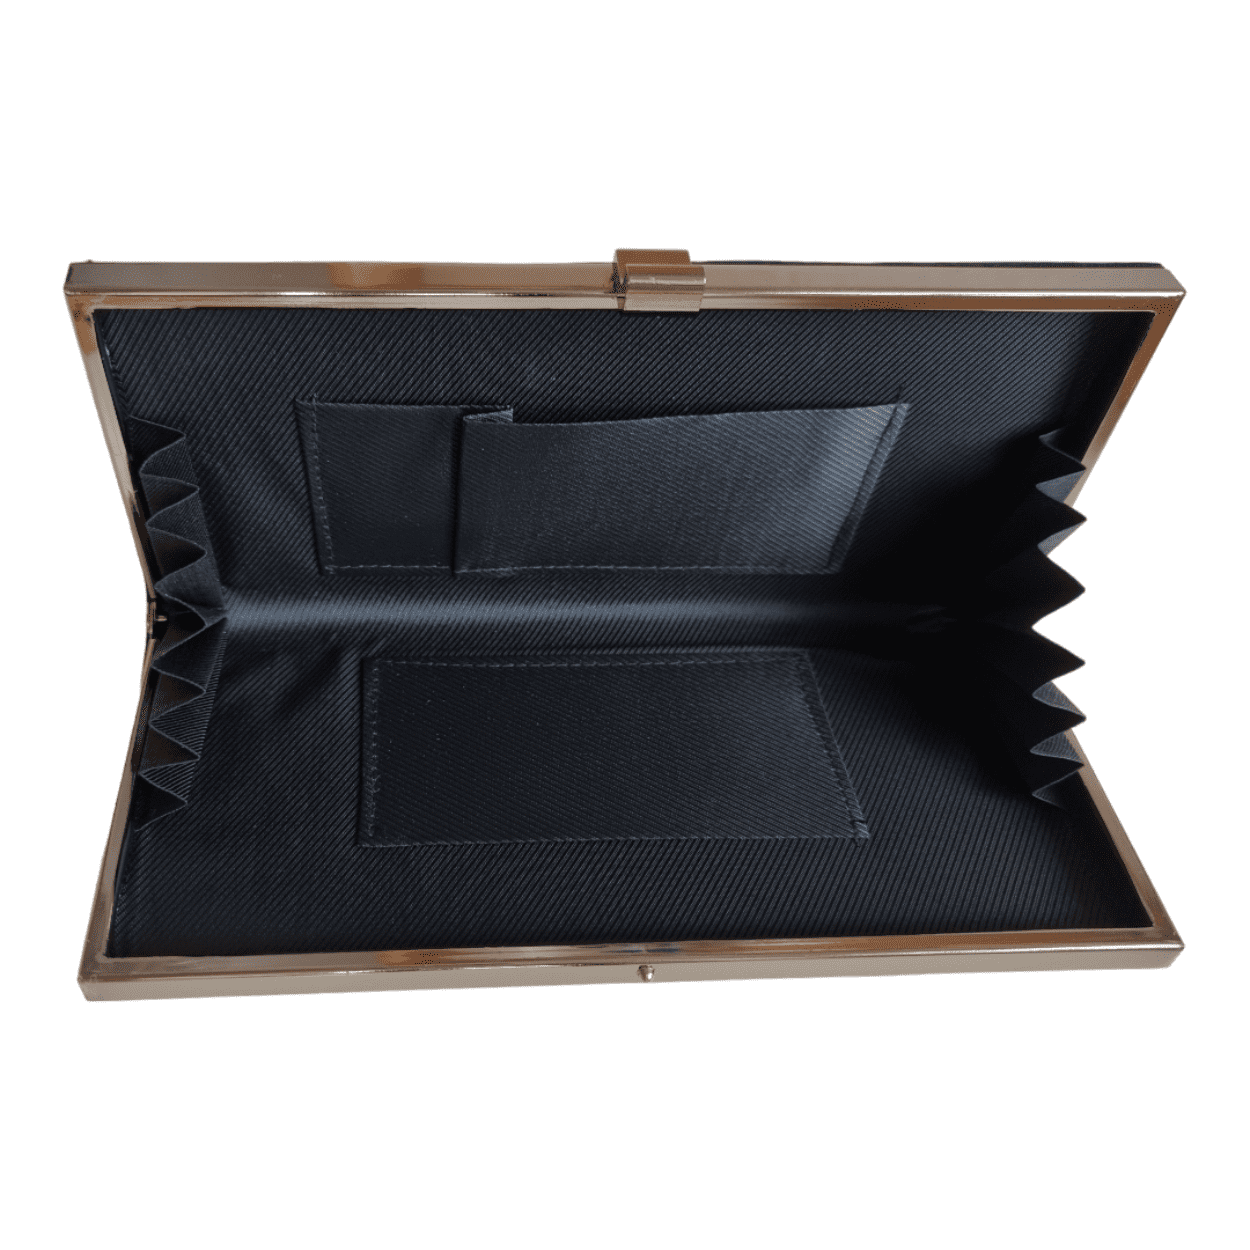 japanische Vintage Handtasche Clutch schwarz